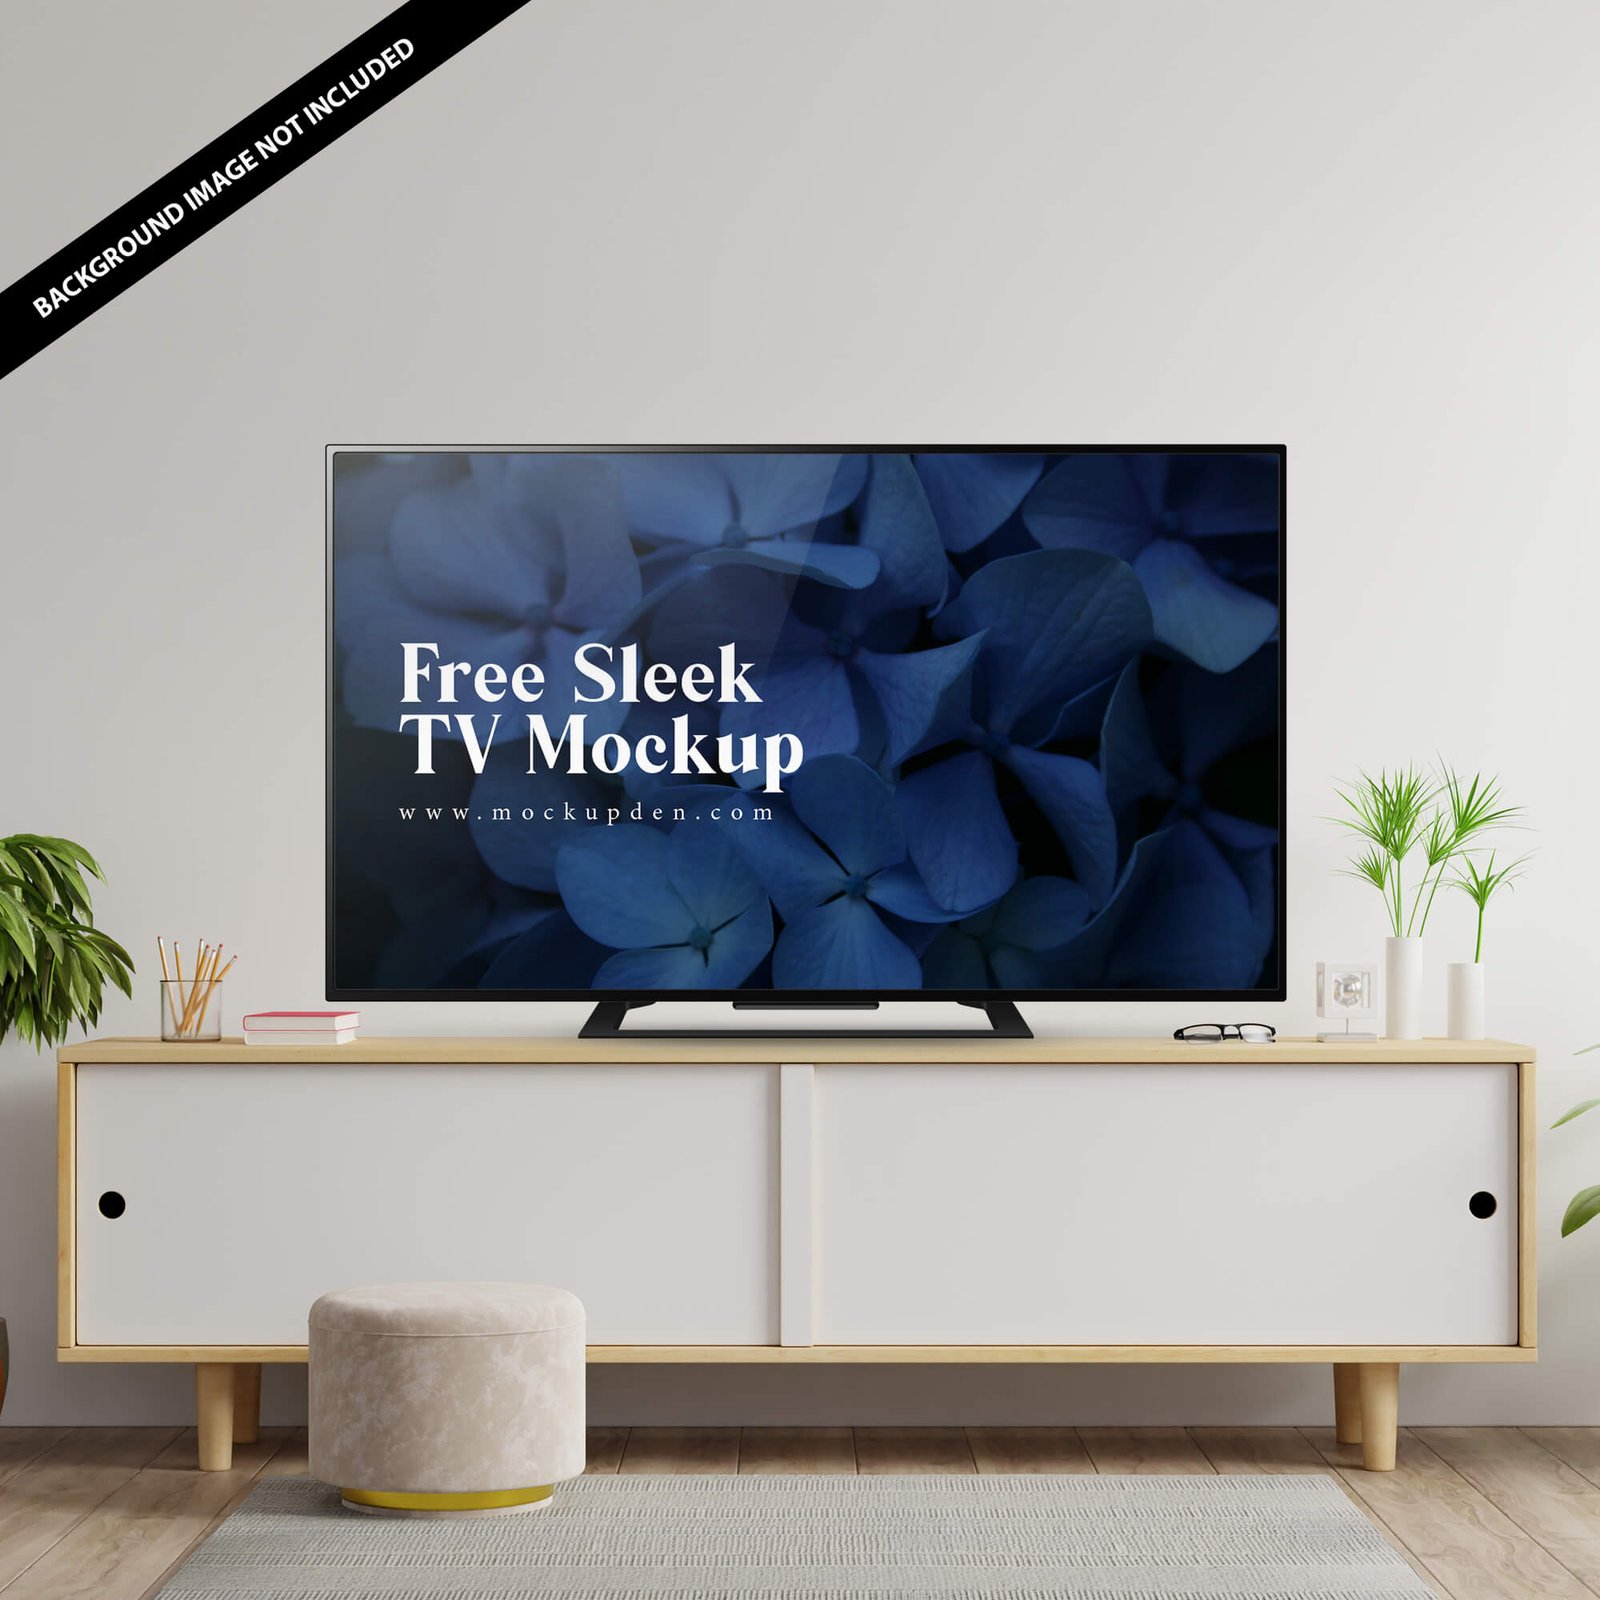 Free Sleek TV Mockup PSD Template